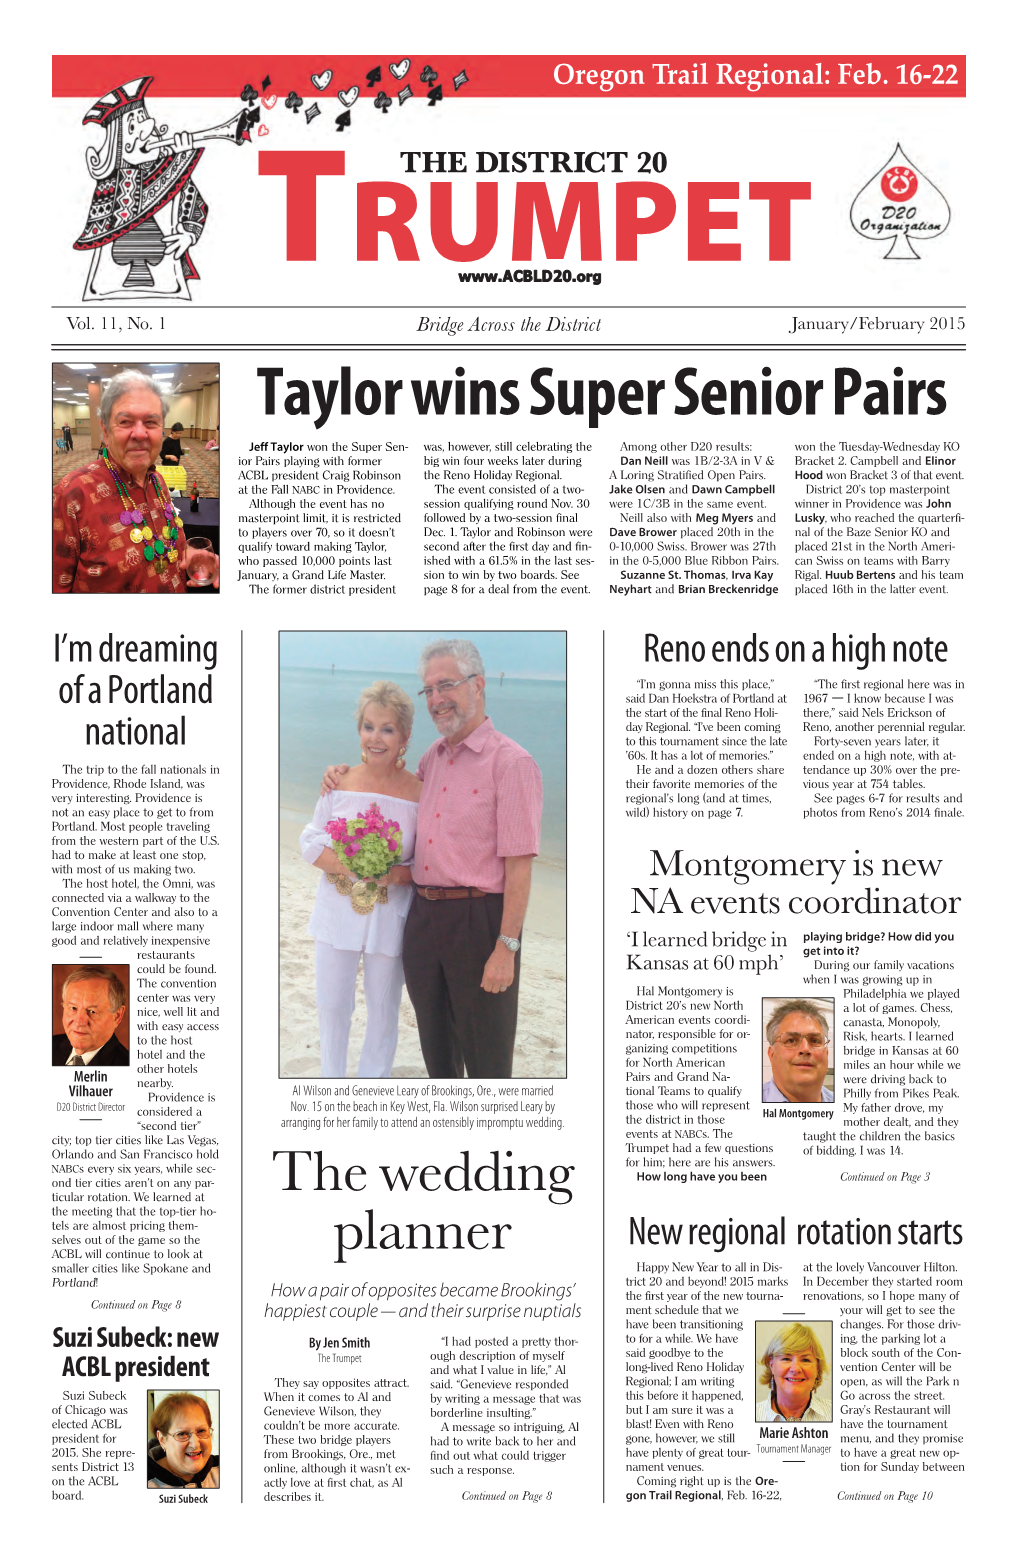 Taylor Wins Super Senior Pairs